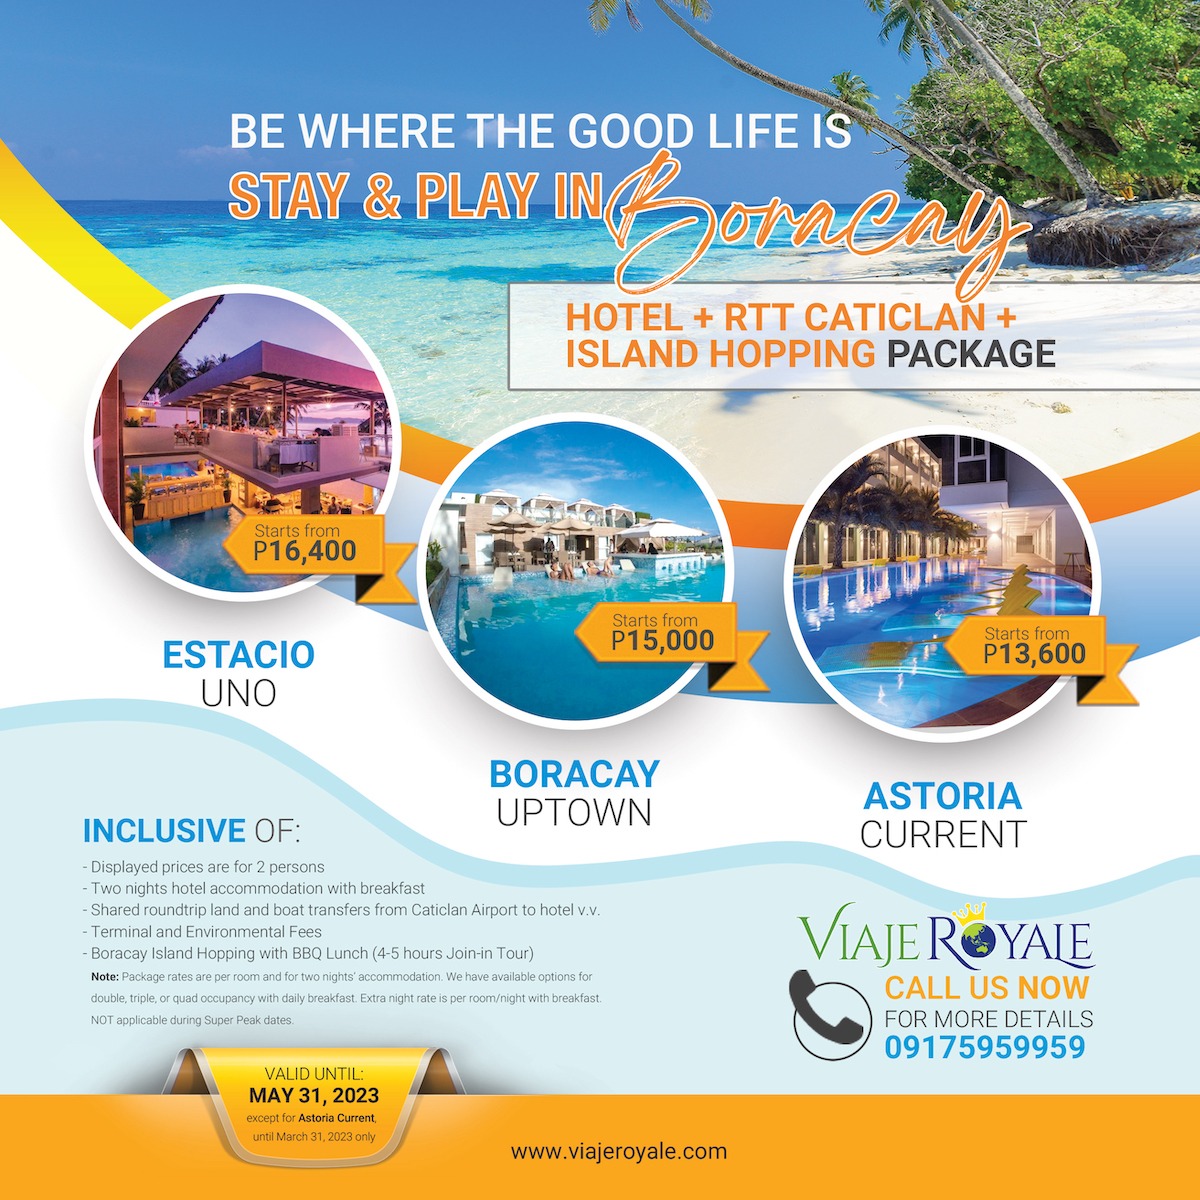 Stay & Play in Boracay